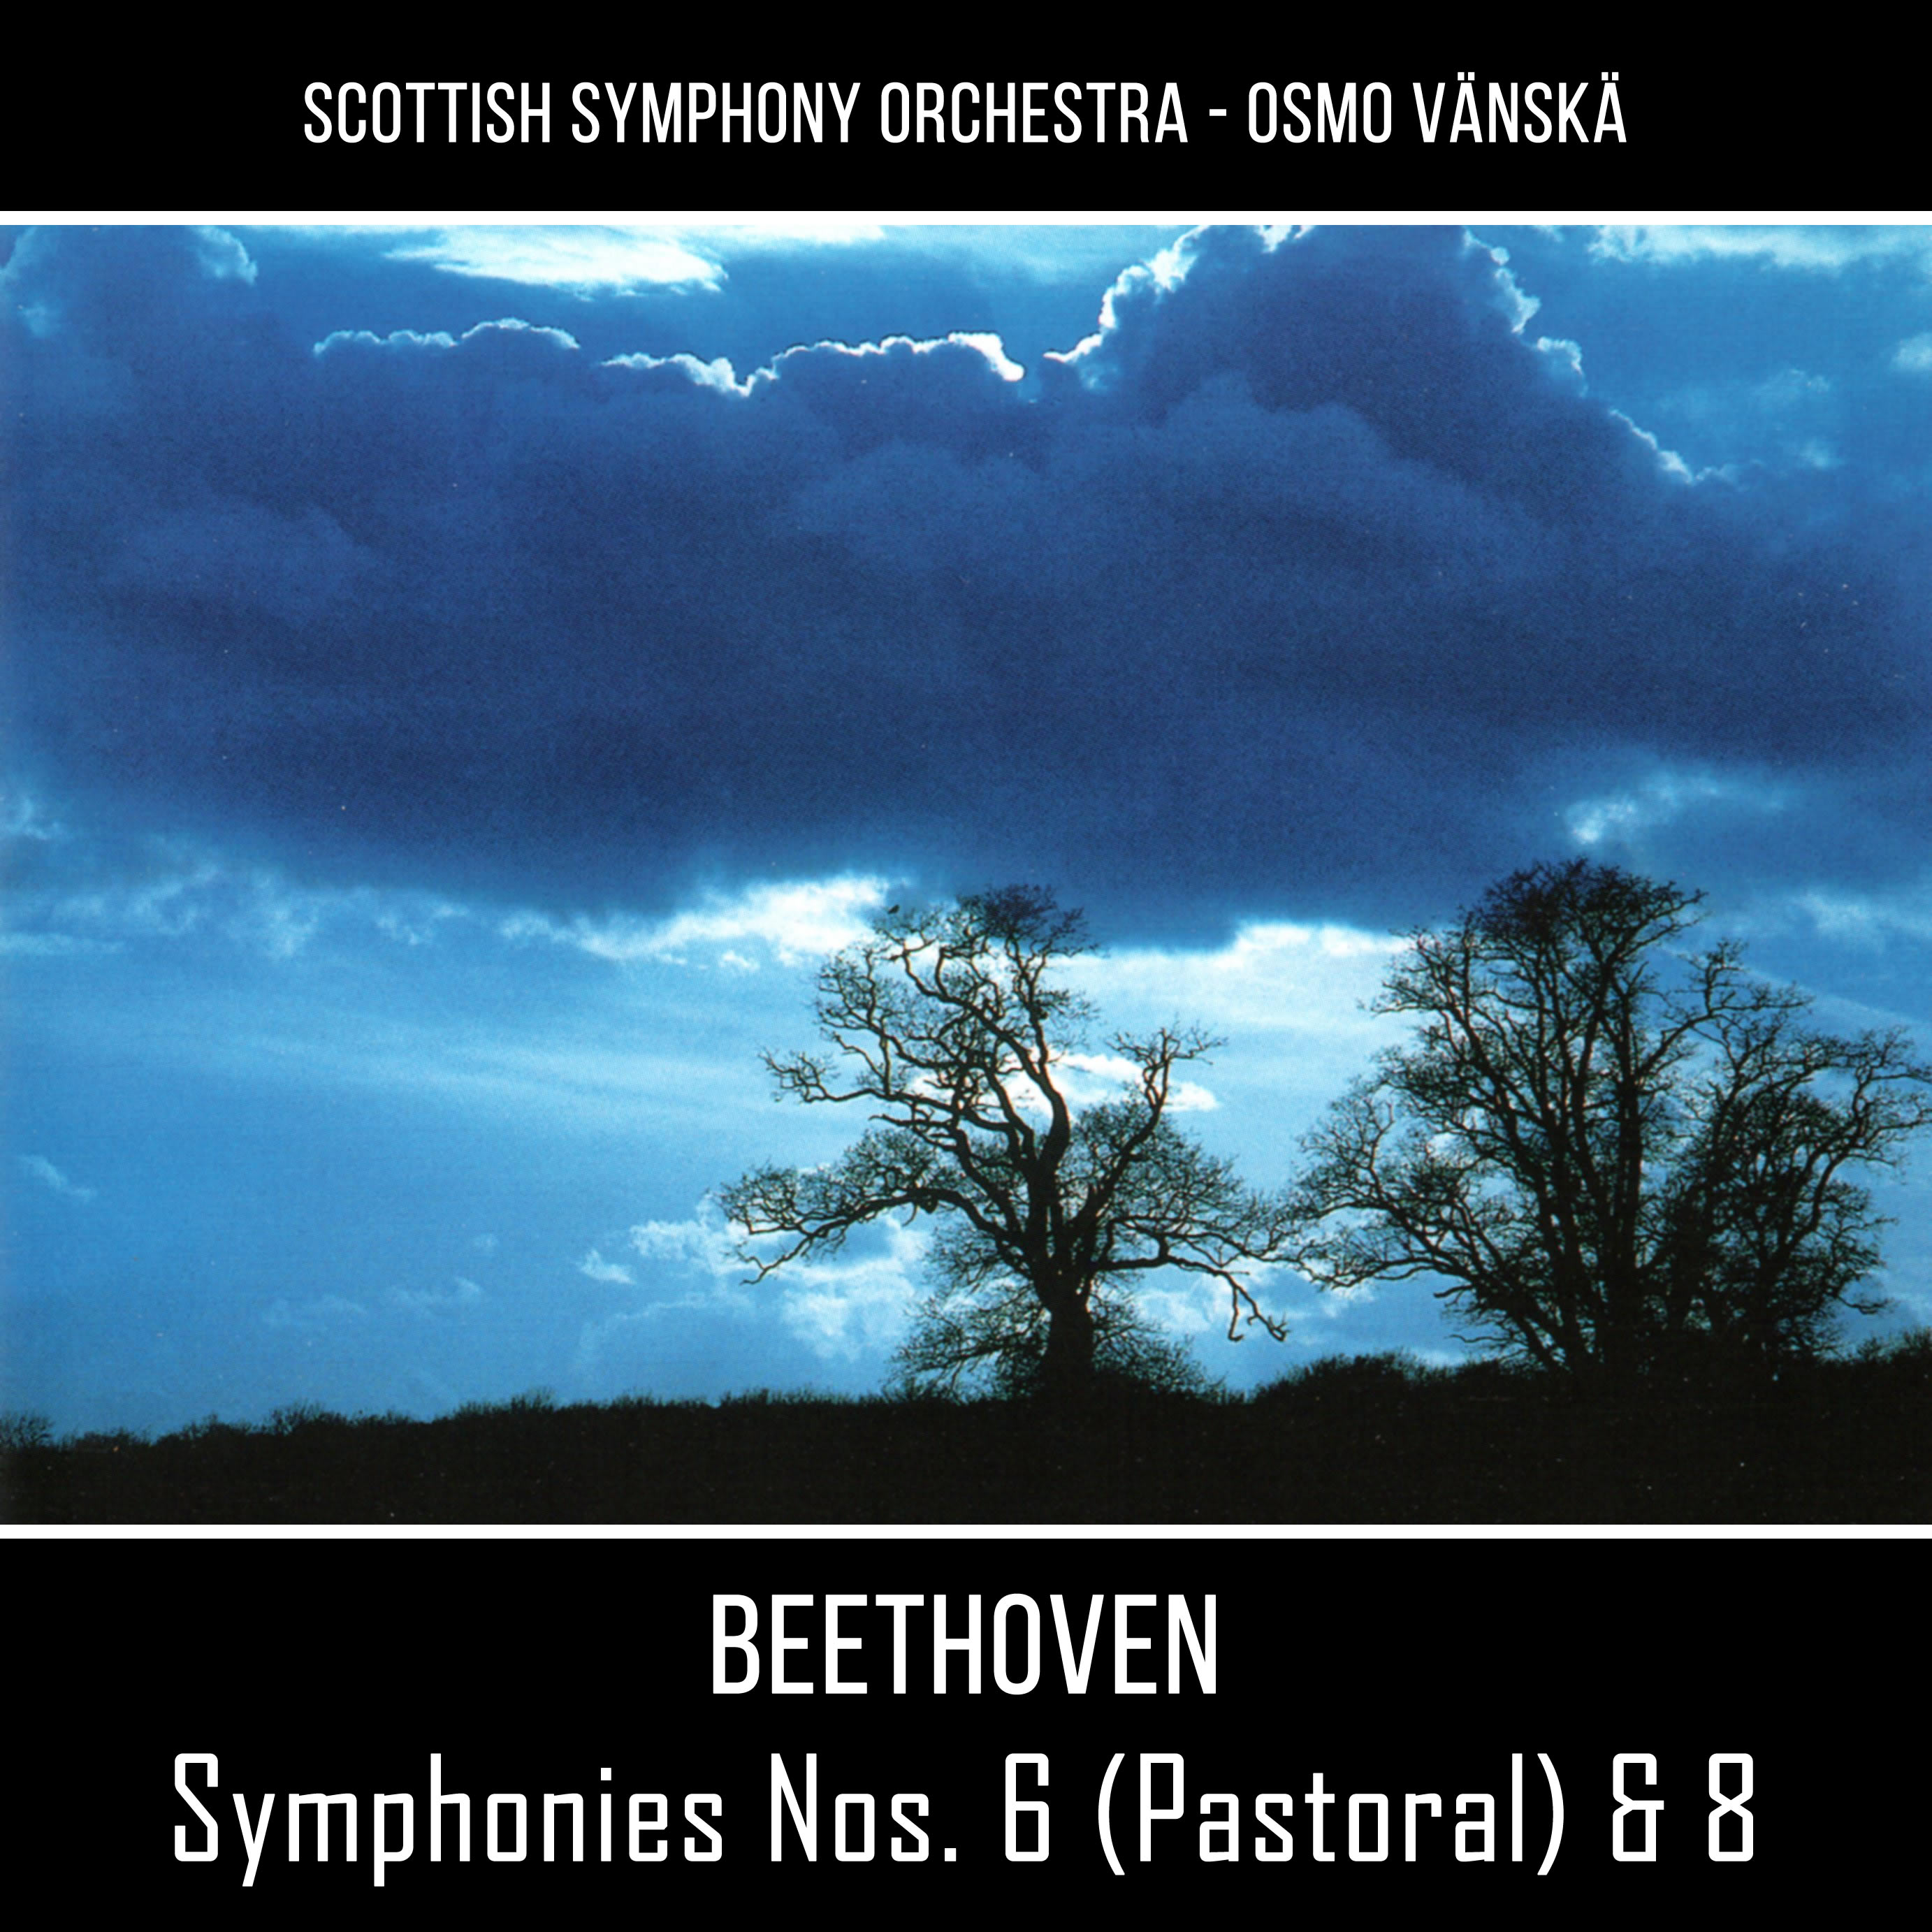 Symphony No. 6 in F, Op. 68, Pastoral: IV. Allegro